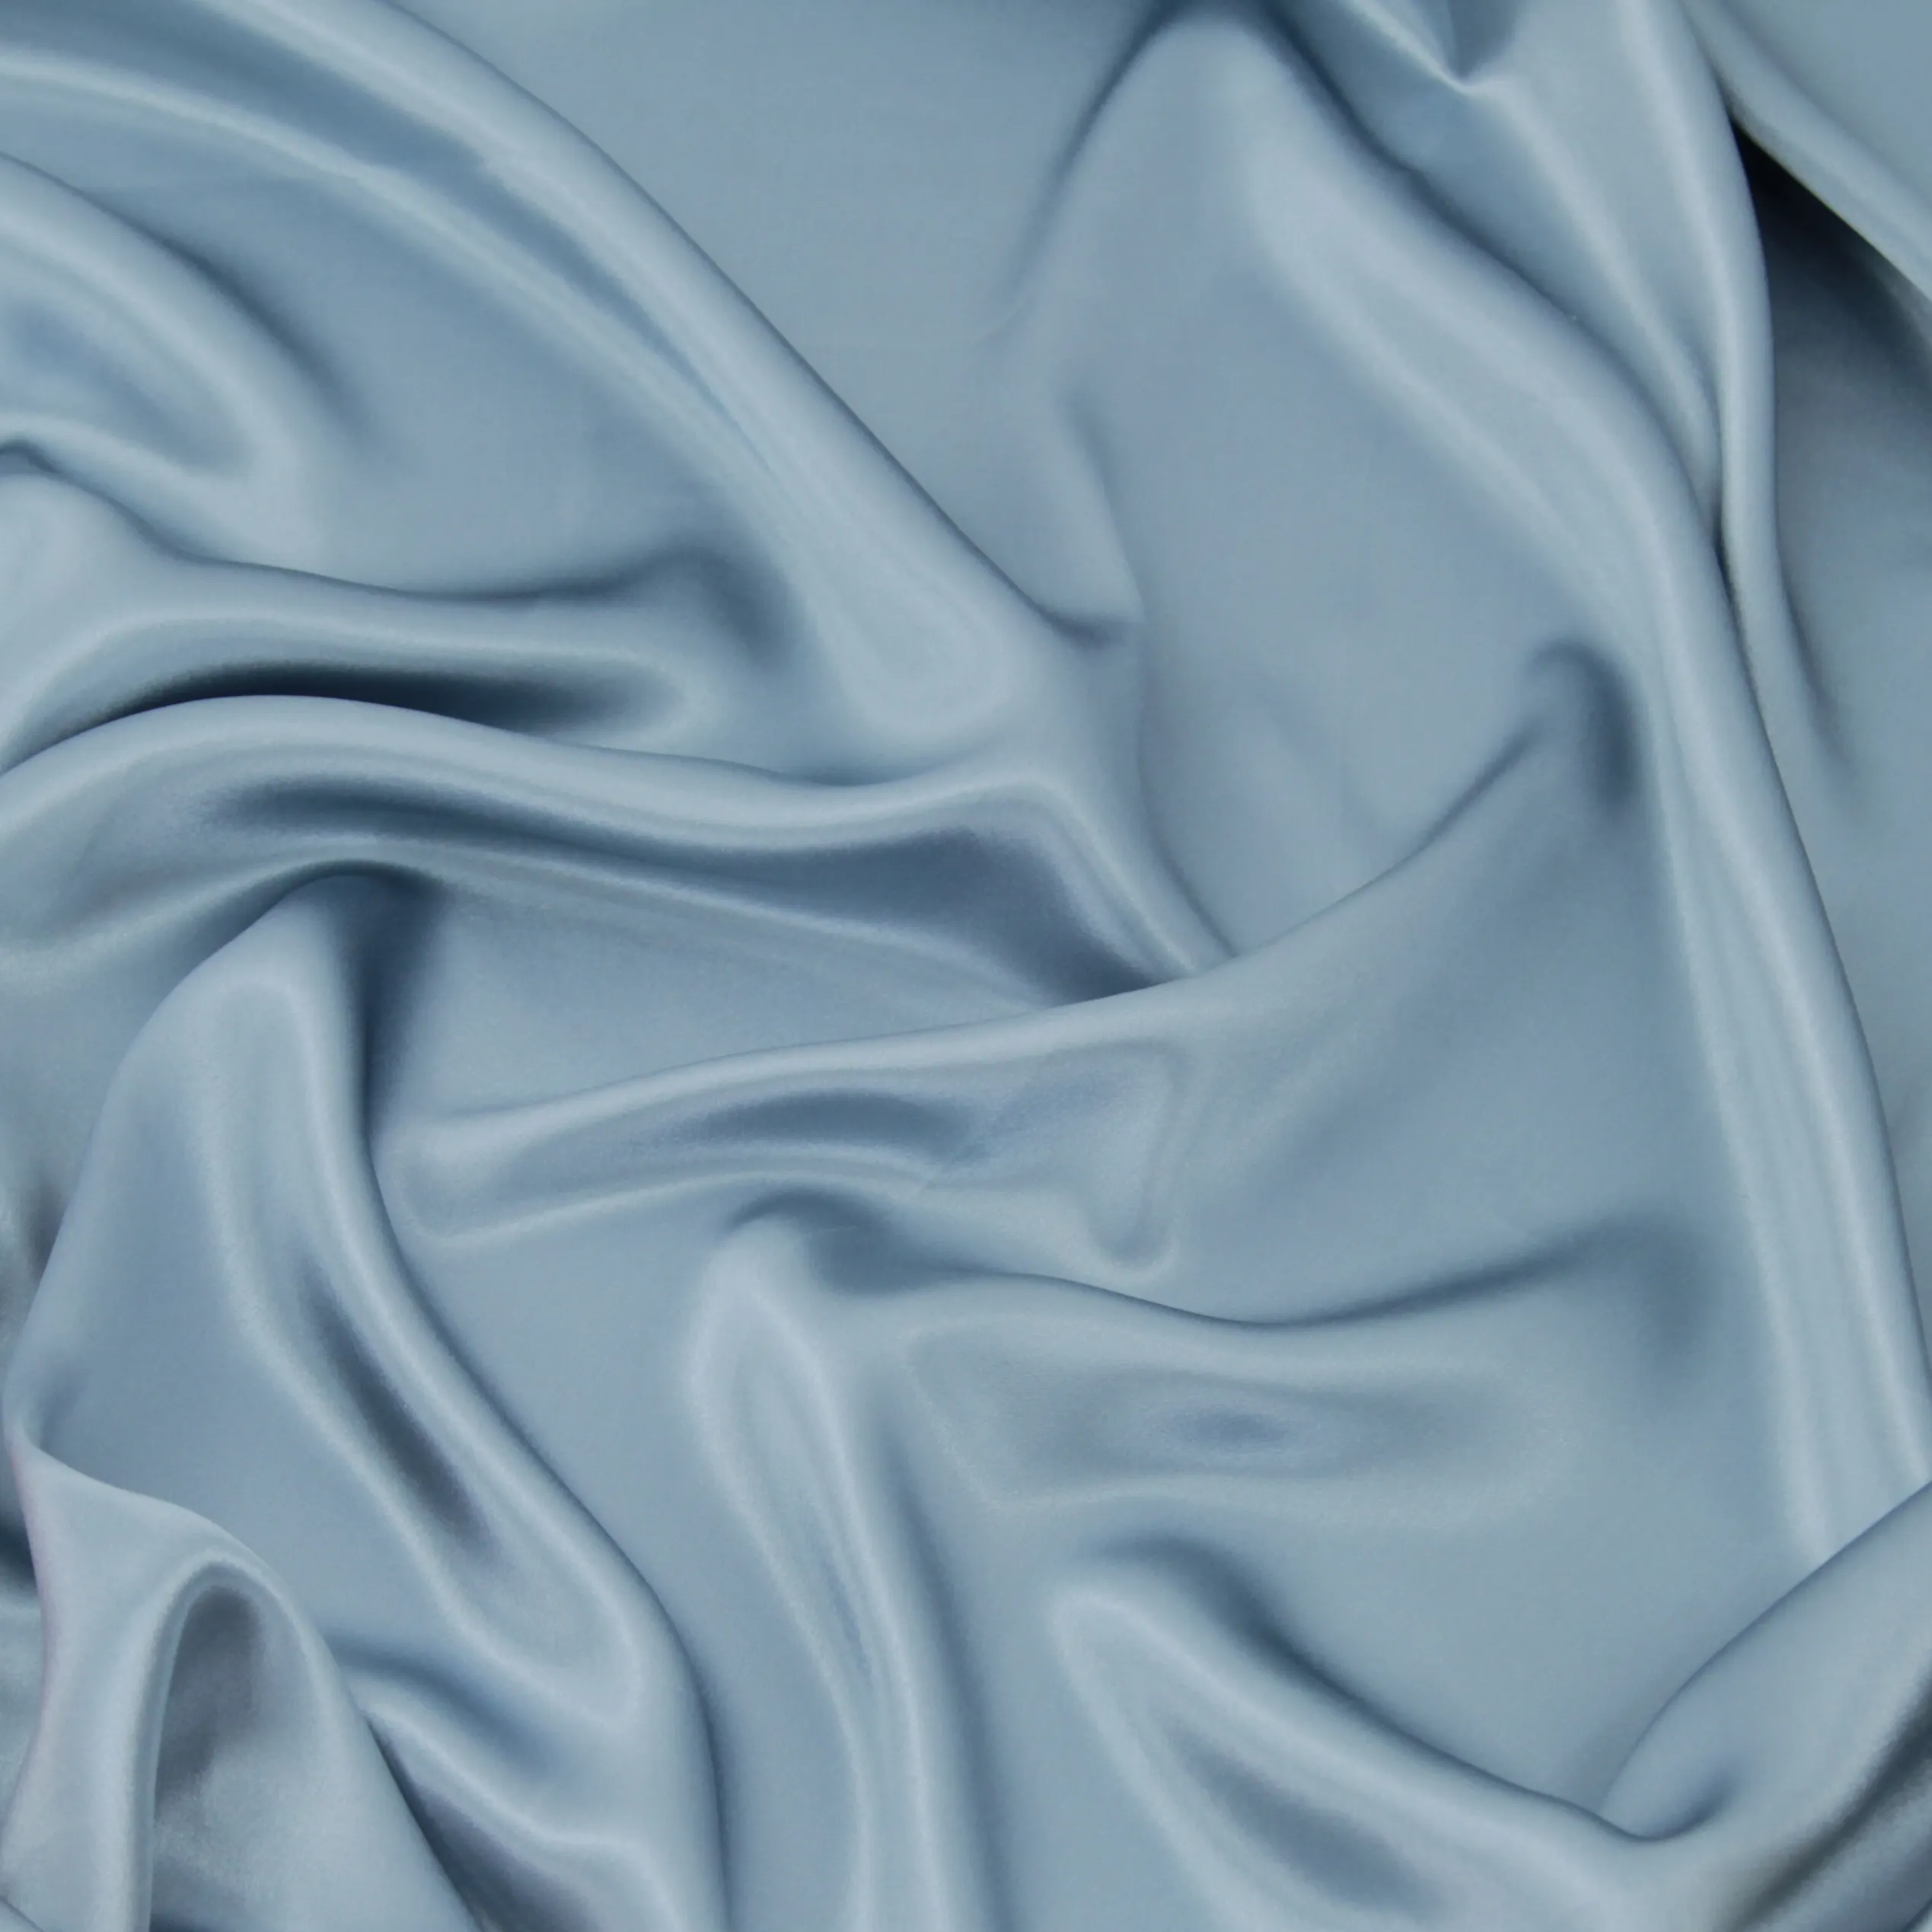 Hot Selling Top Class 21 mommie Silk 100% Fabric Crepe Silk Satin 112cm width 6A Grade by Daranfang Silk